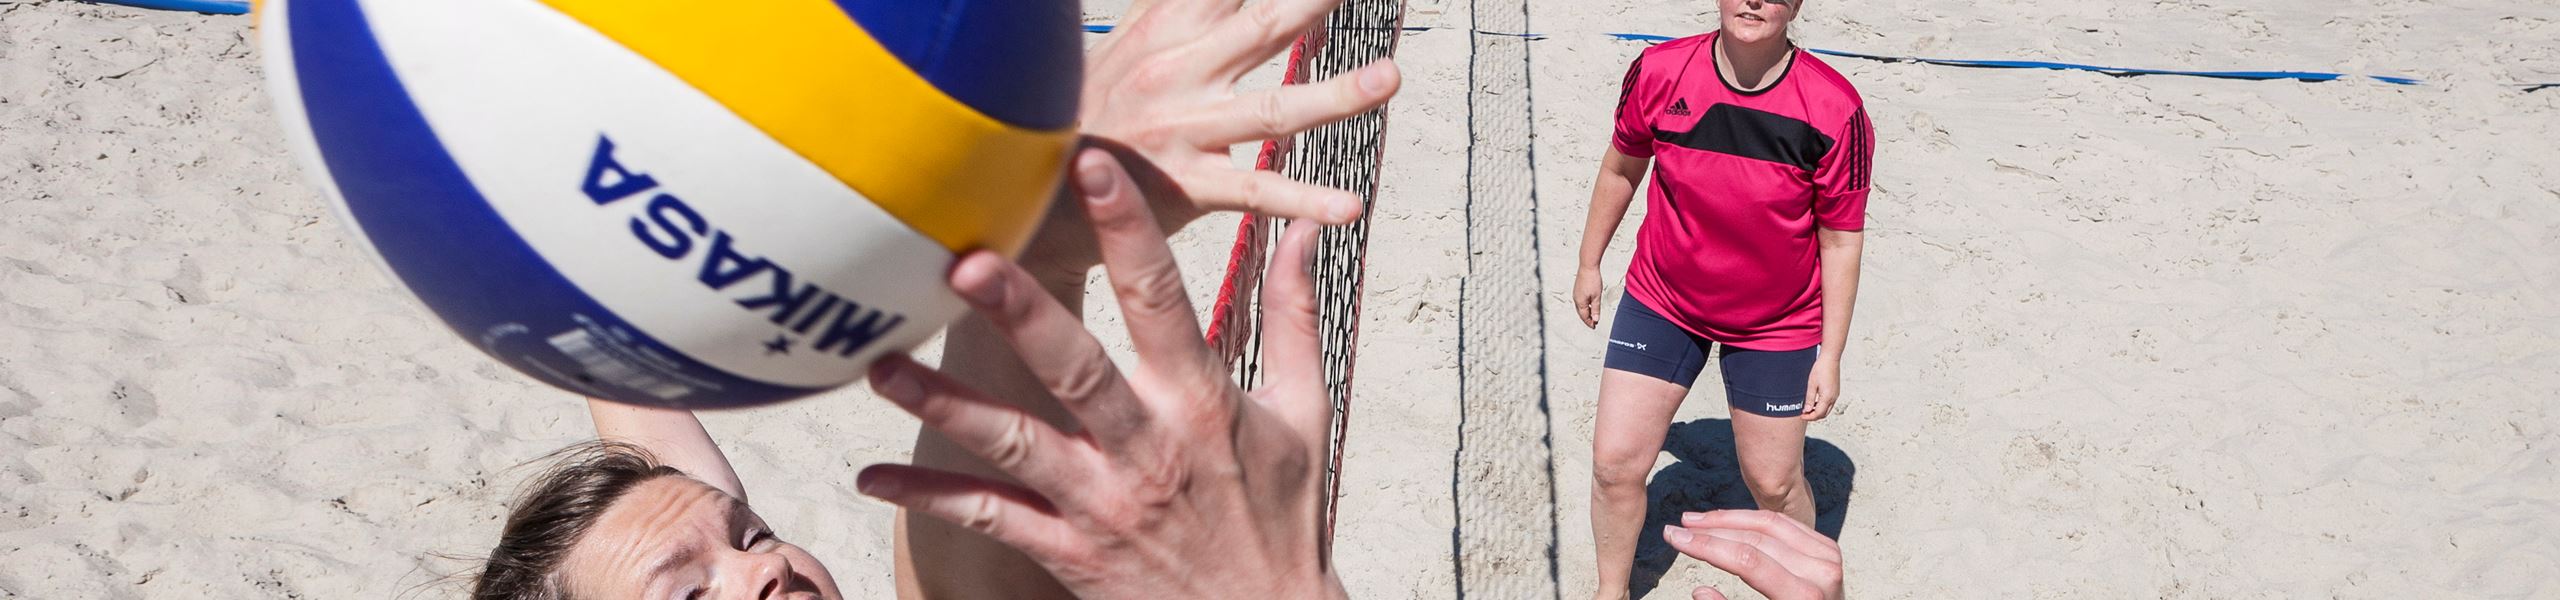 Volleyball_strandvolley_kvindevolley_ved nettet